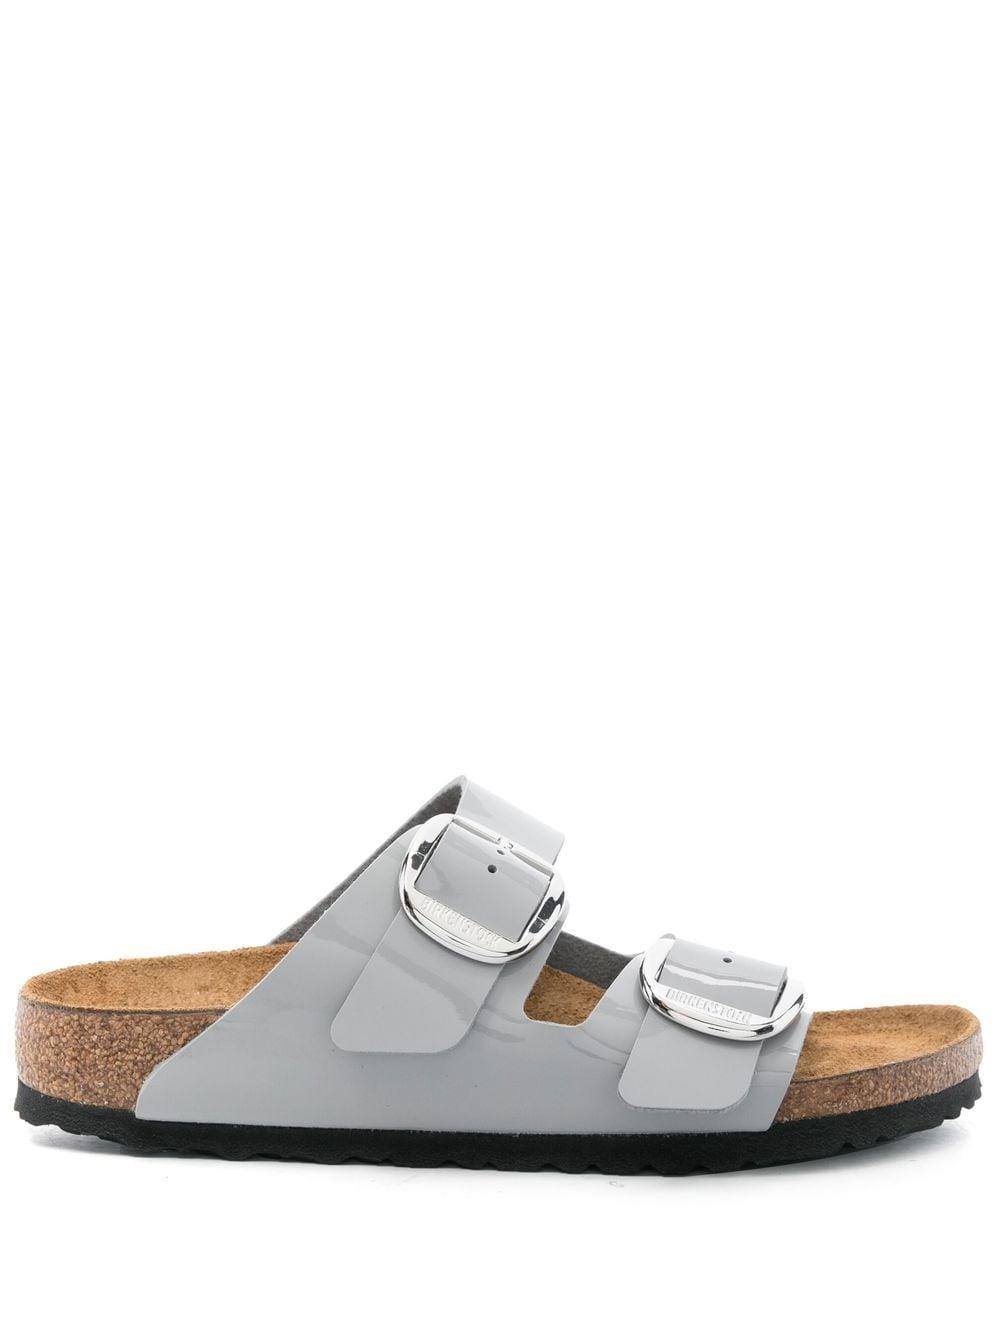 Birkenstock Leather Arizona Big Buckle Sandals in Grey (White) - Save 18% |  Lyst